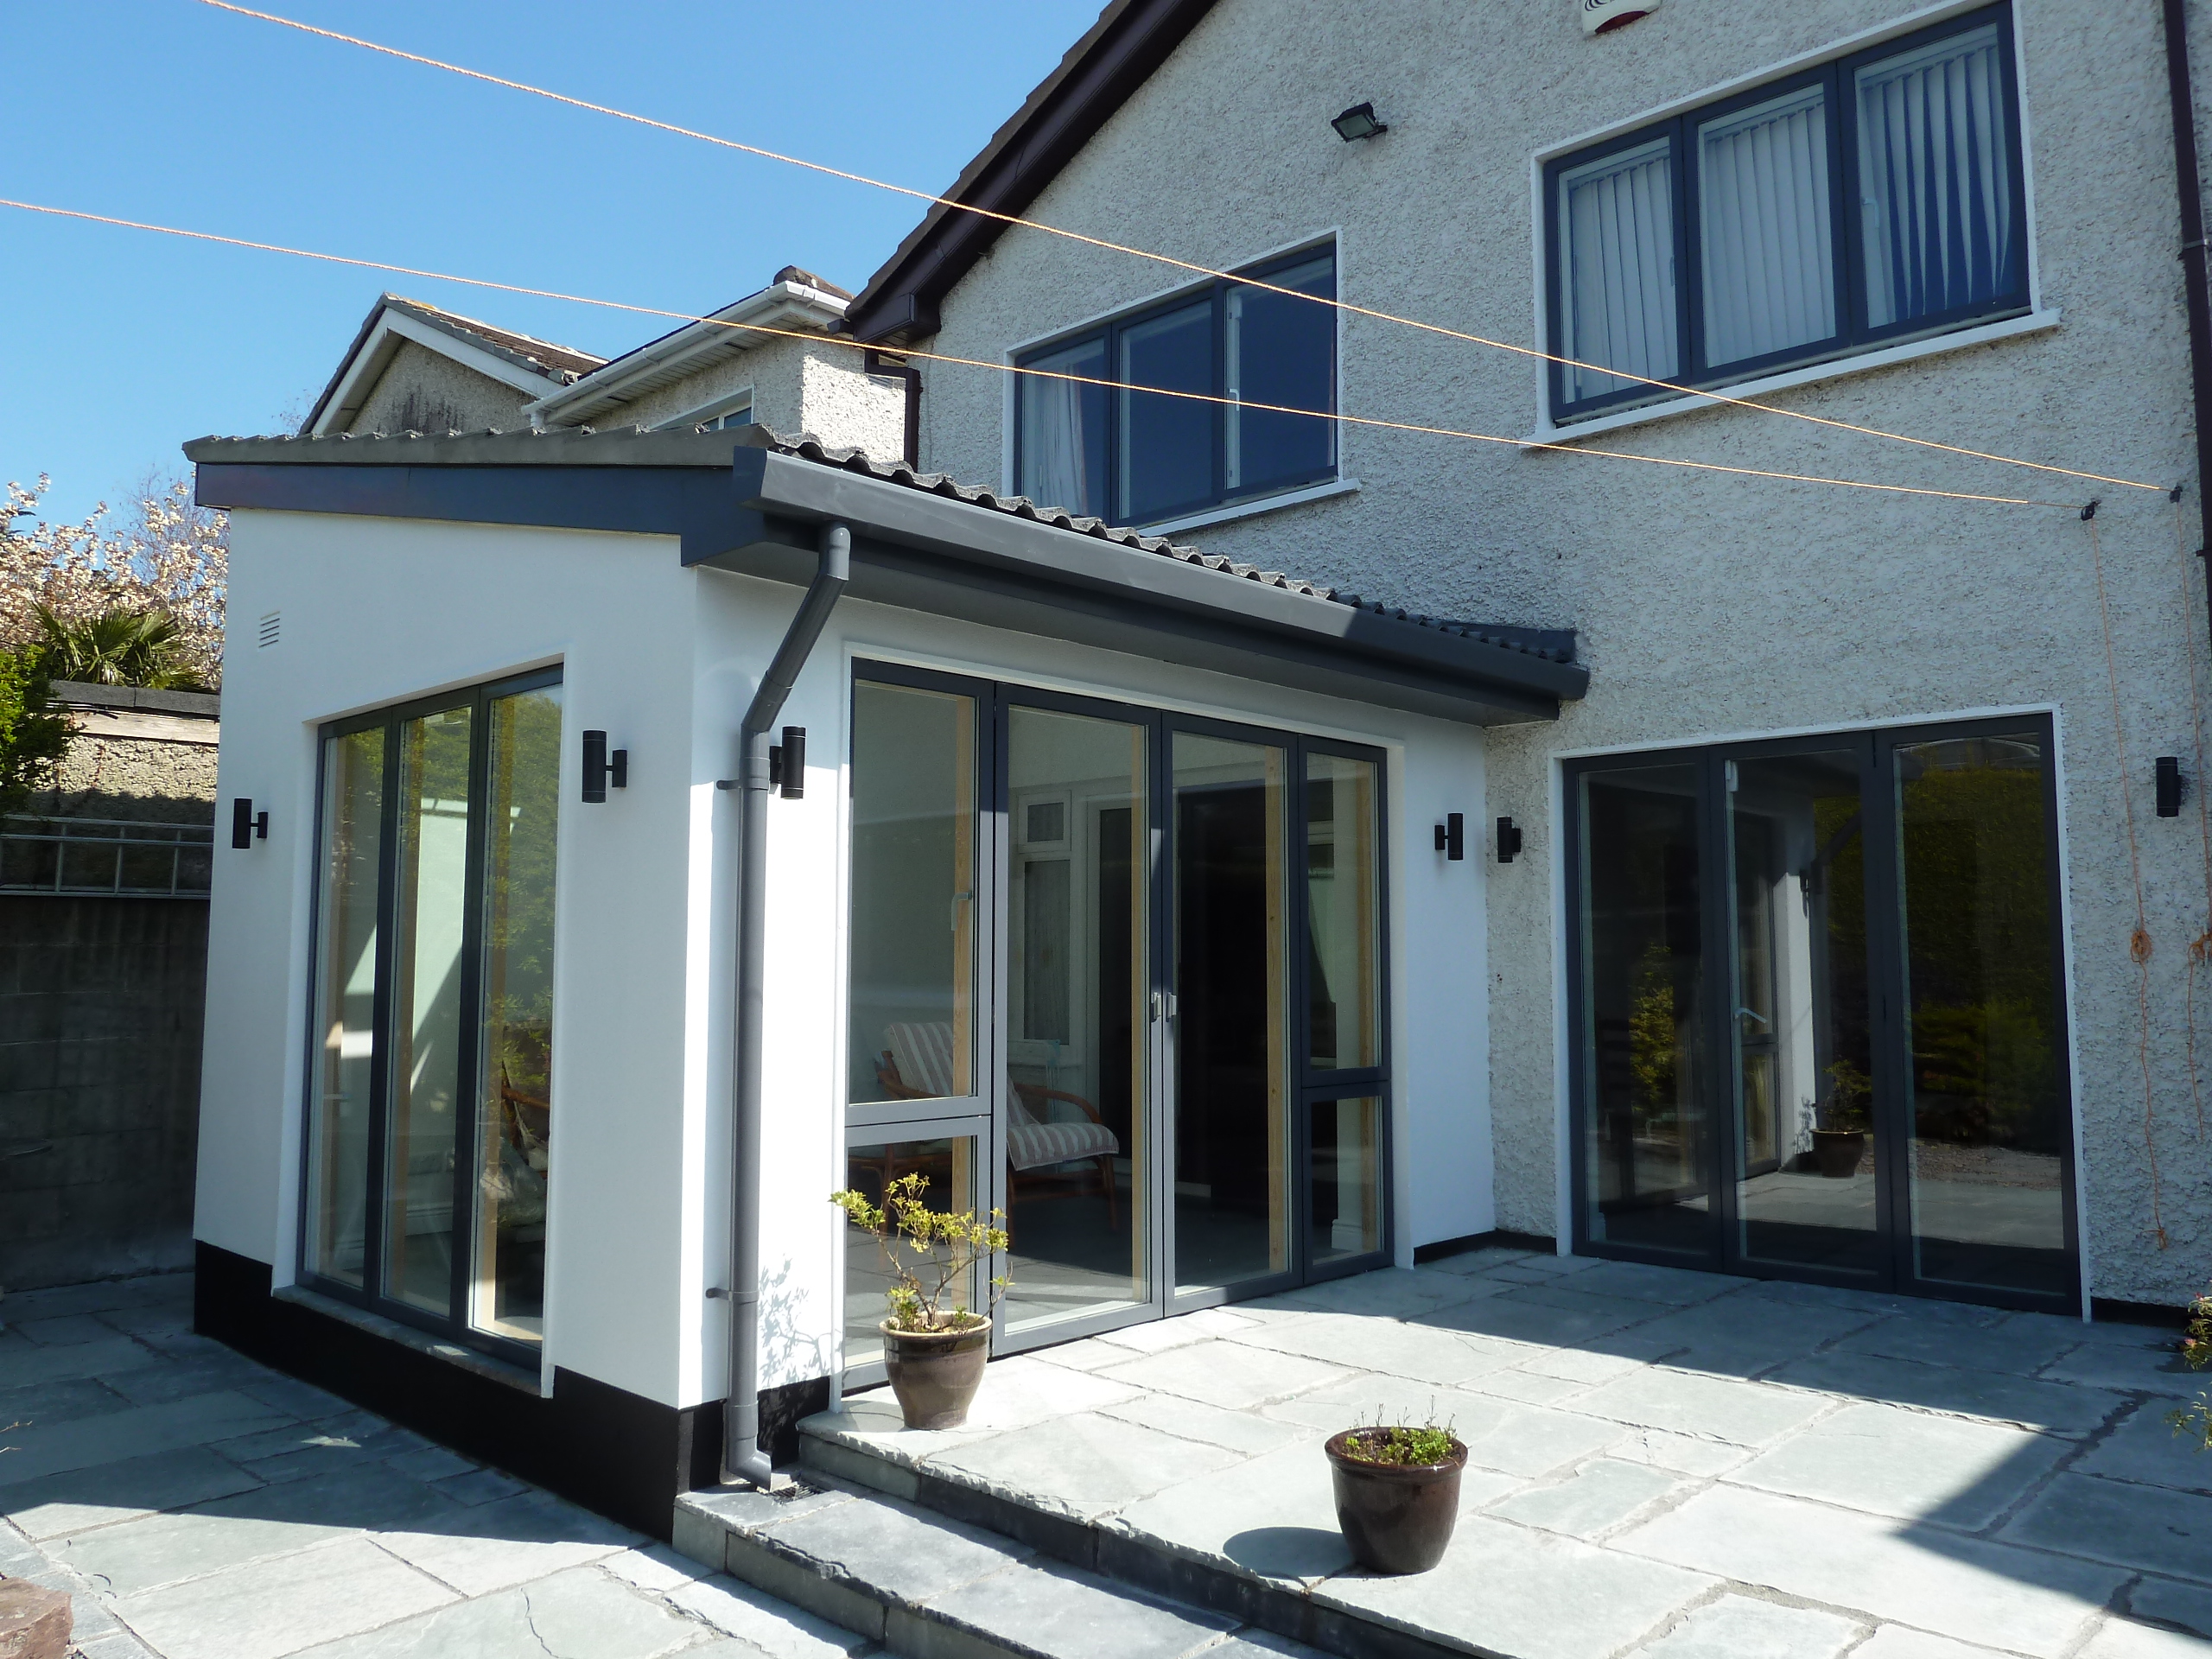 energy efficient architect designed Home Dublin Ireland